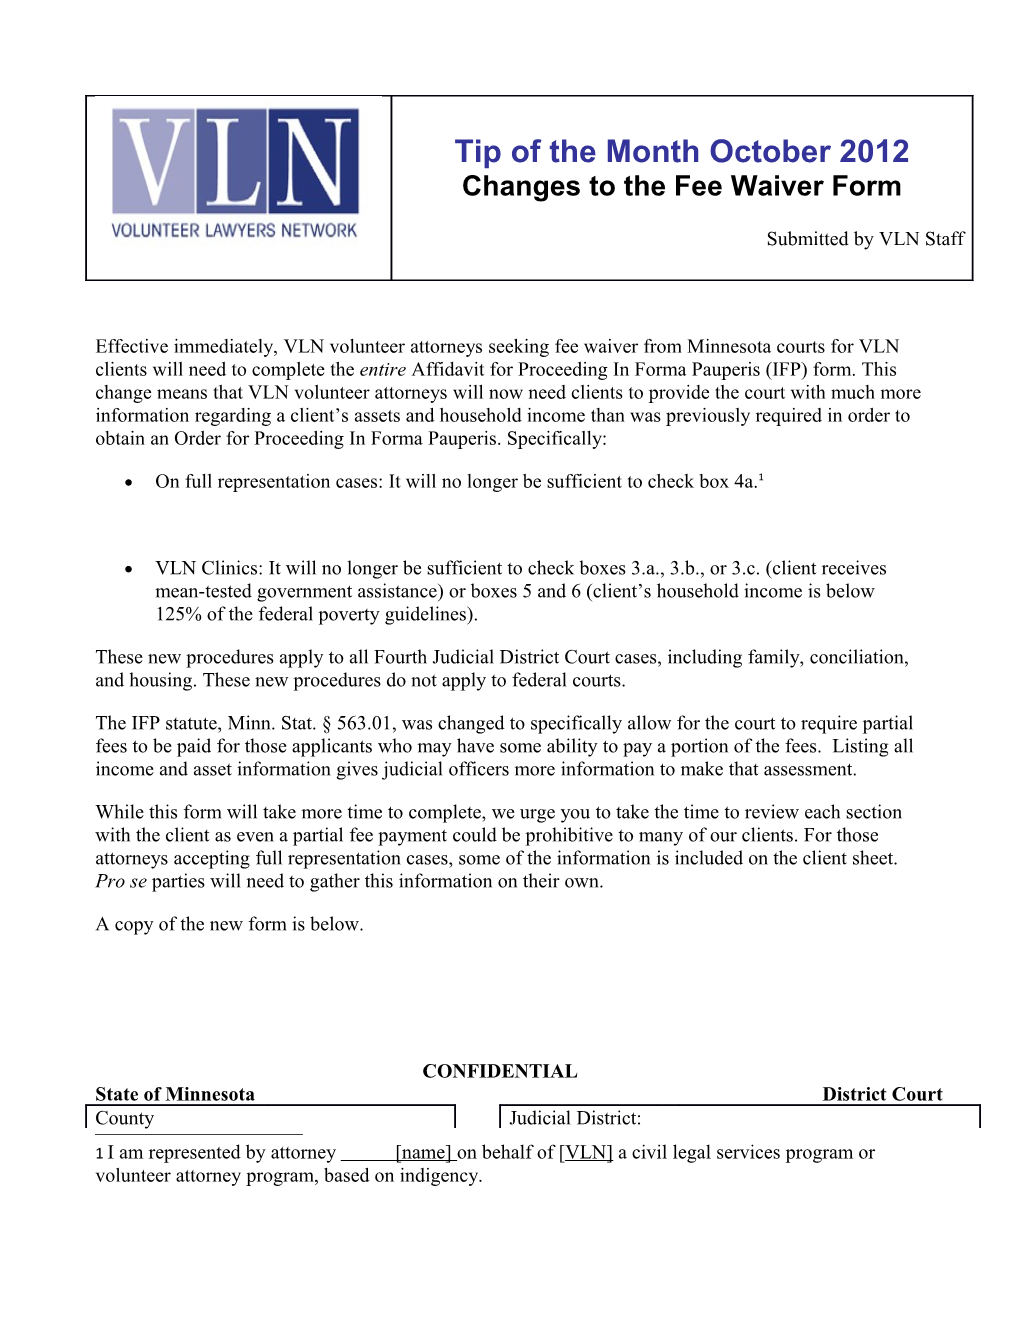 Effective Immediately, VLN Volunteer Attorneys Seeking Fee Waiver from Minnesota Courts